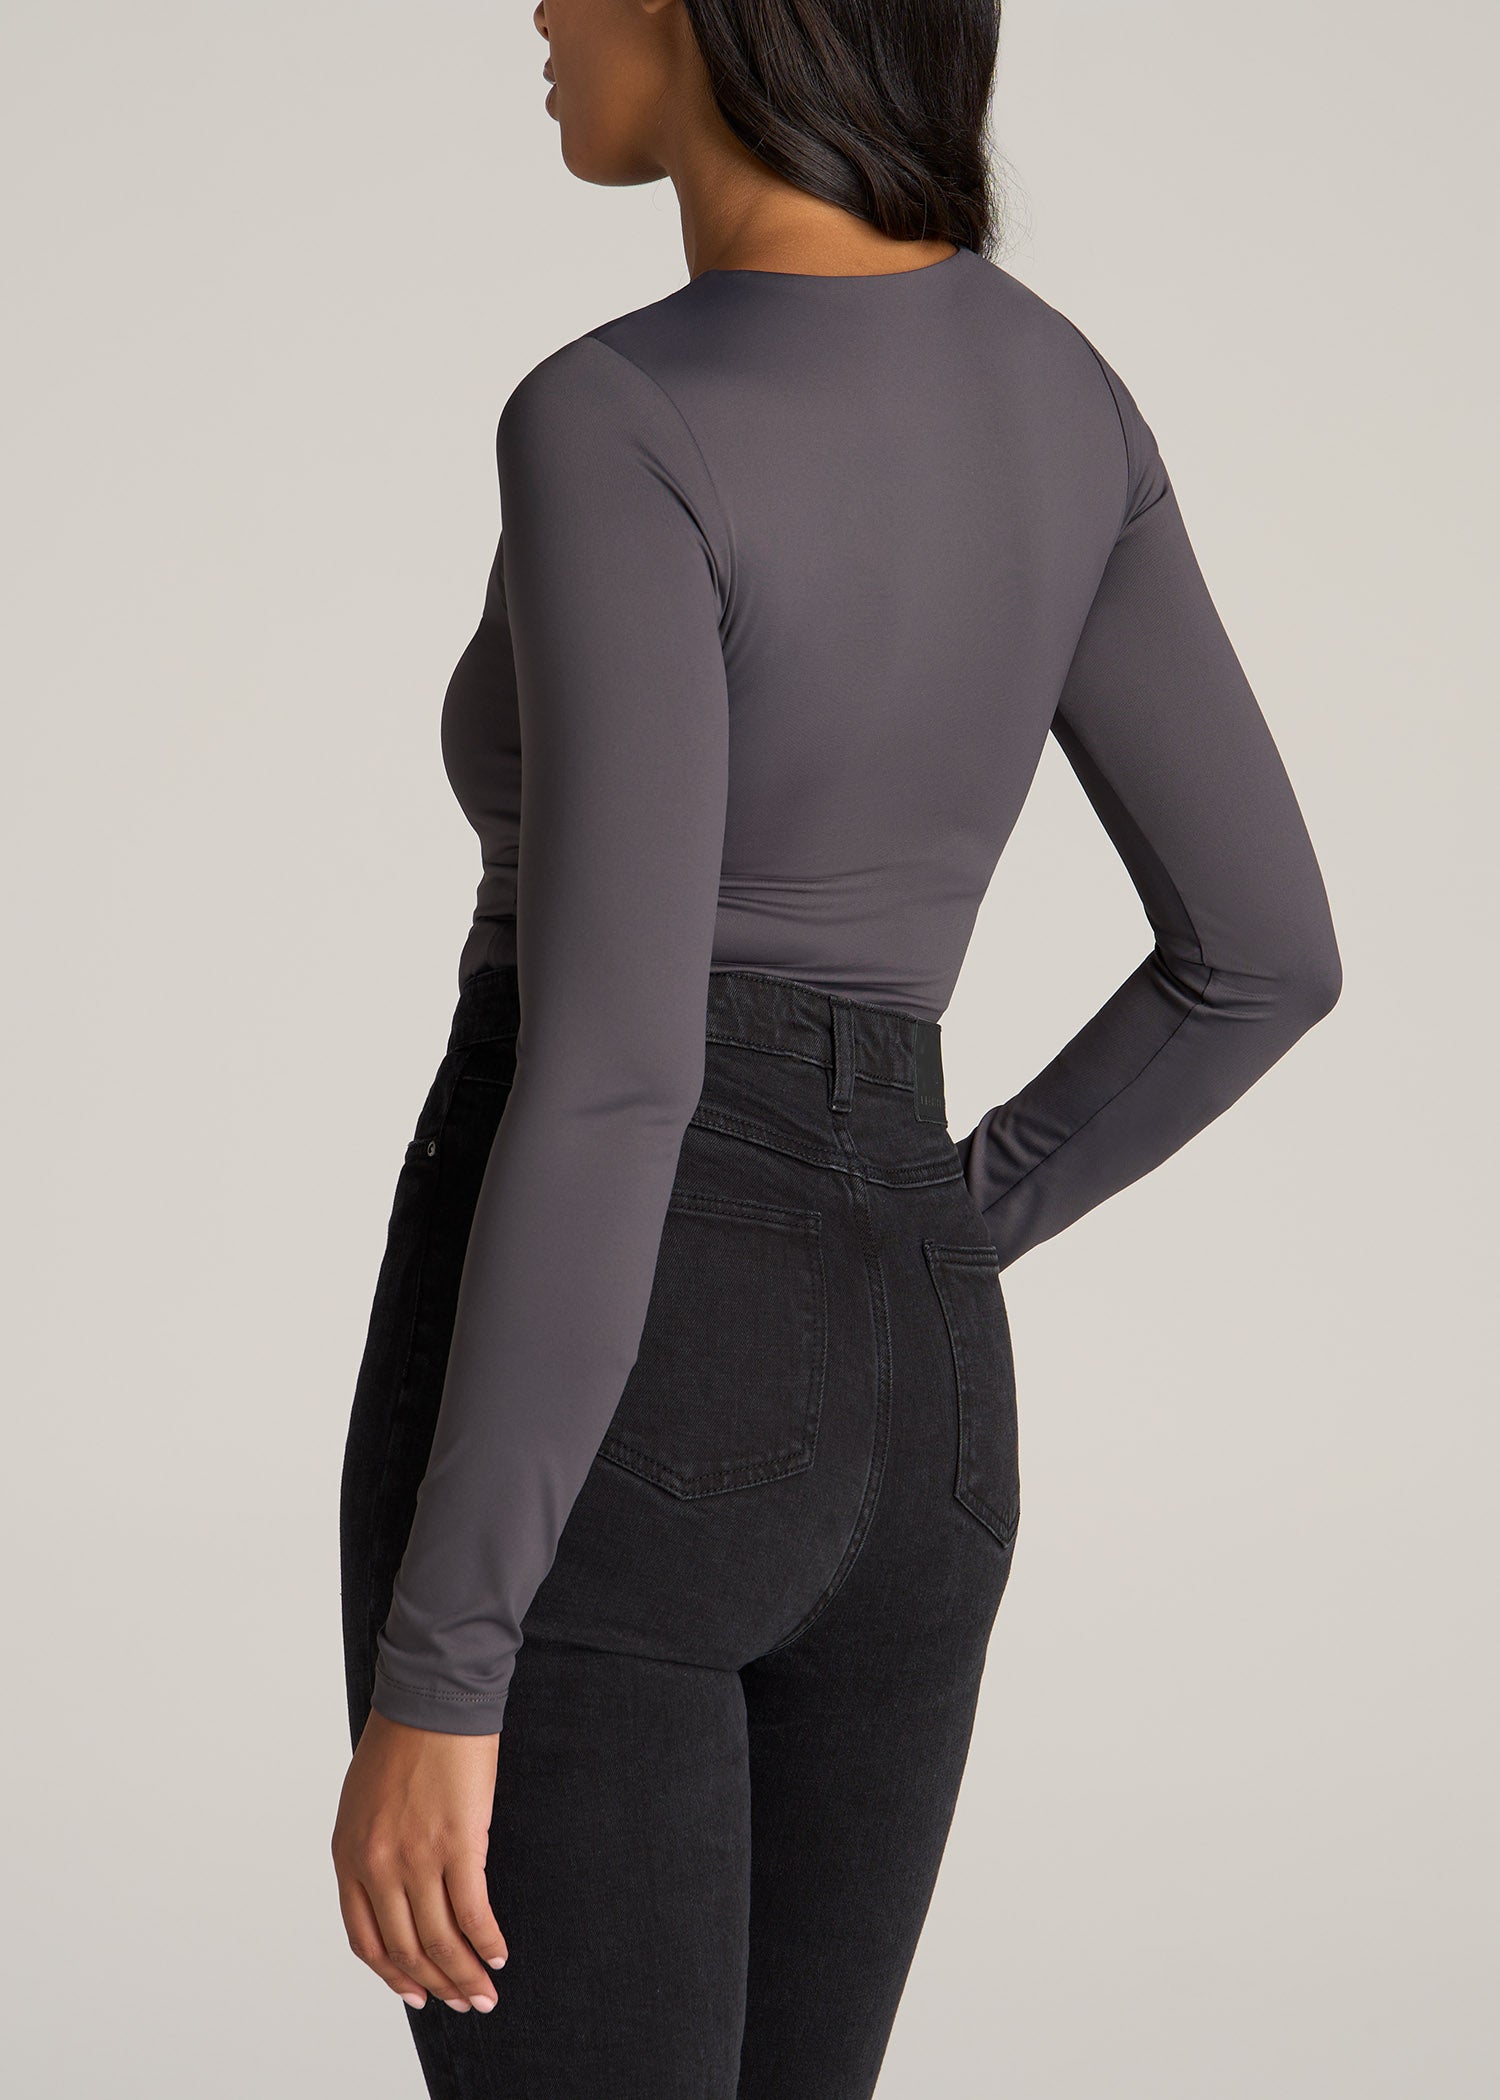 Lulu Short Sleeve Bodysuits for Women